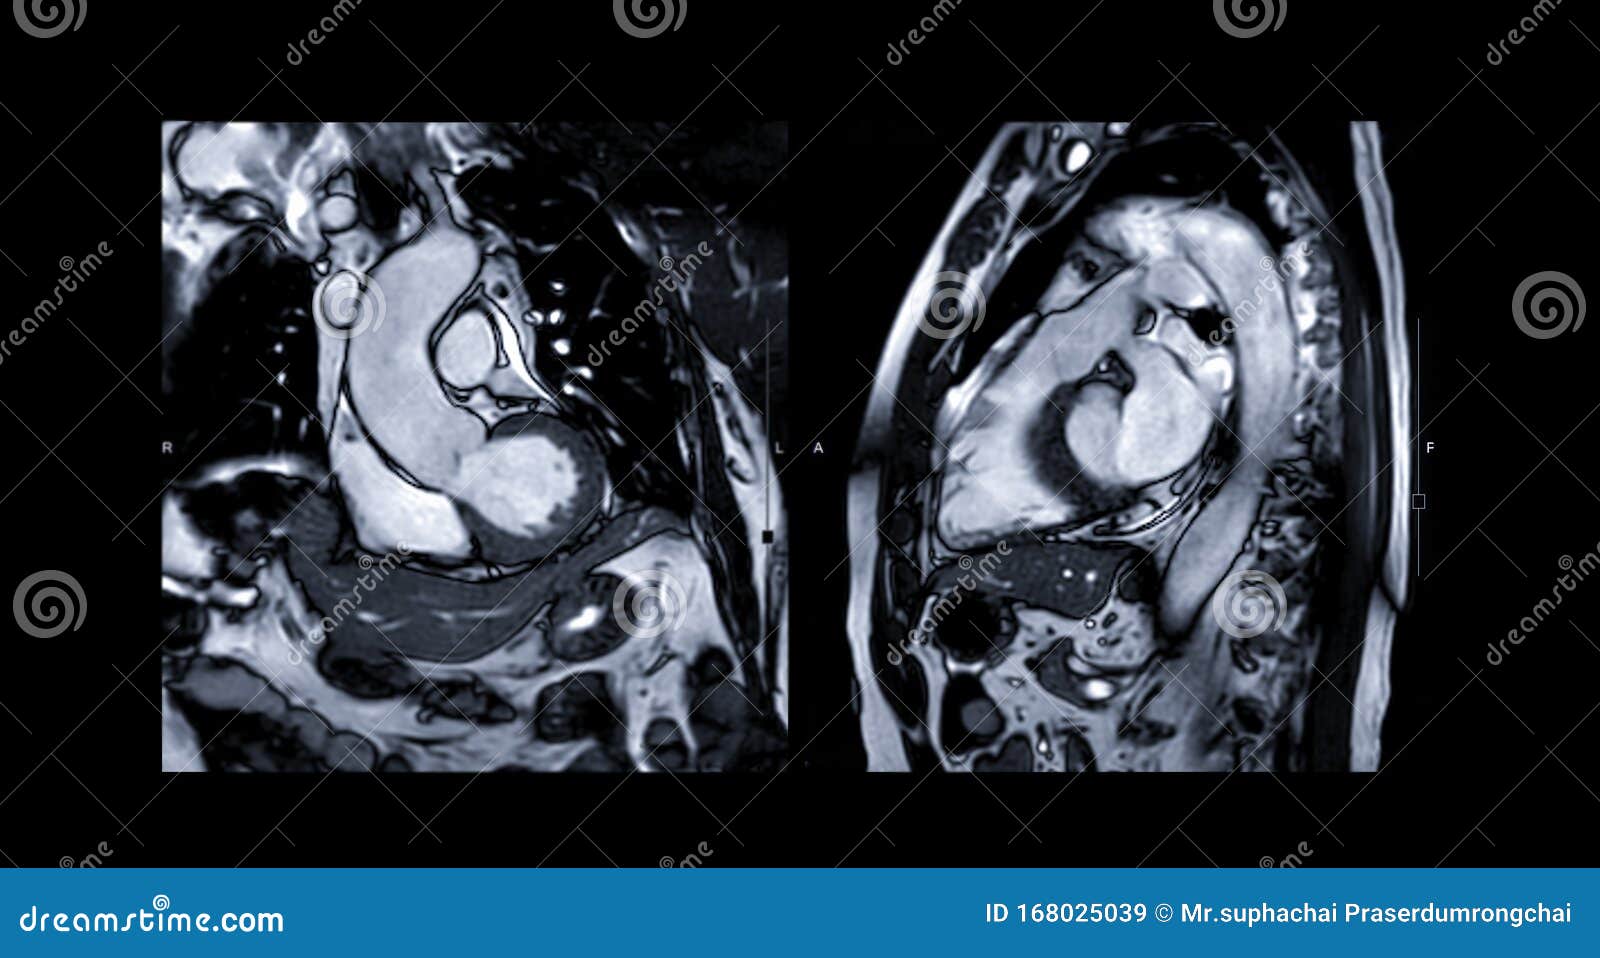 mri heart or cardiac mri  magnetic resonance imaging  of heart compare rvot and lvot.